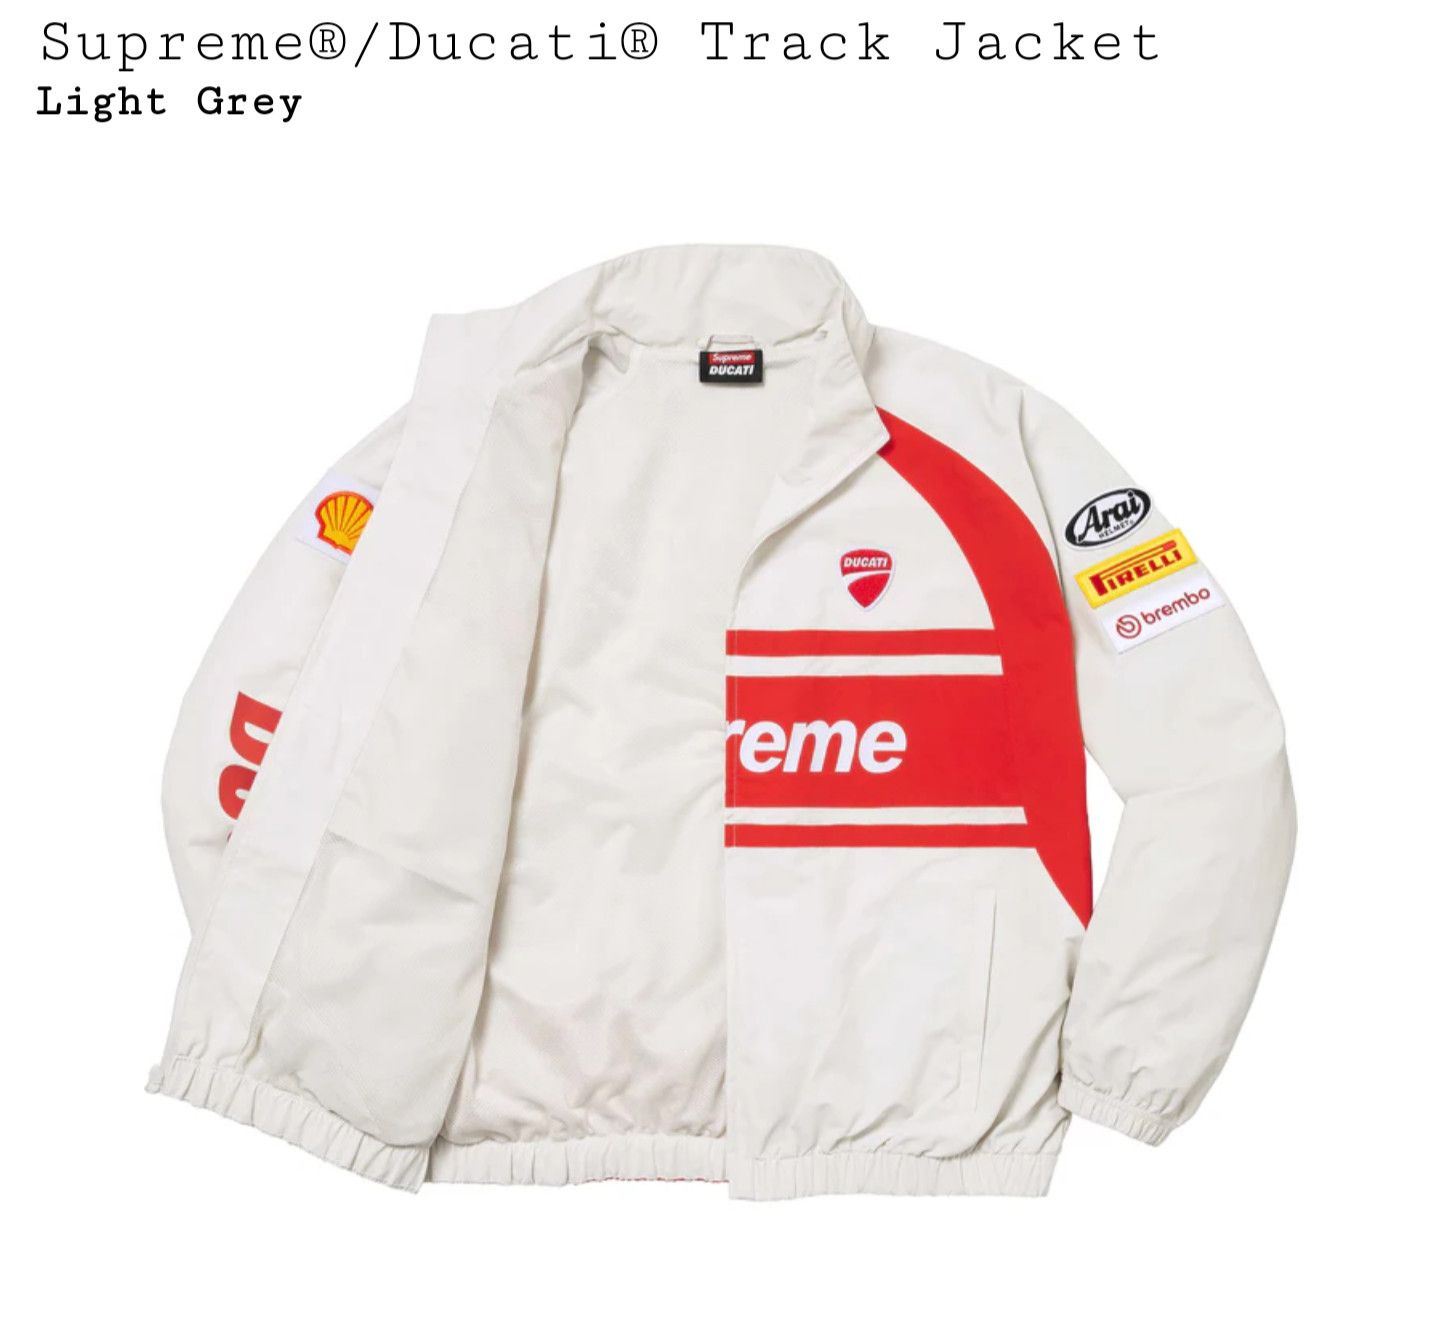 Supreme Supreme x Ducati Track Jacket | Grailed